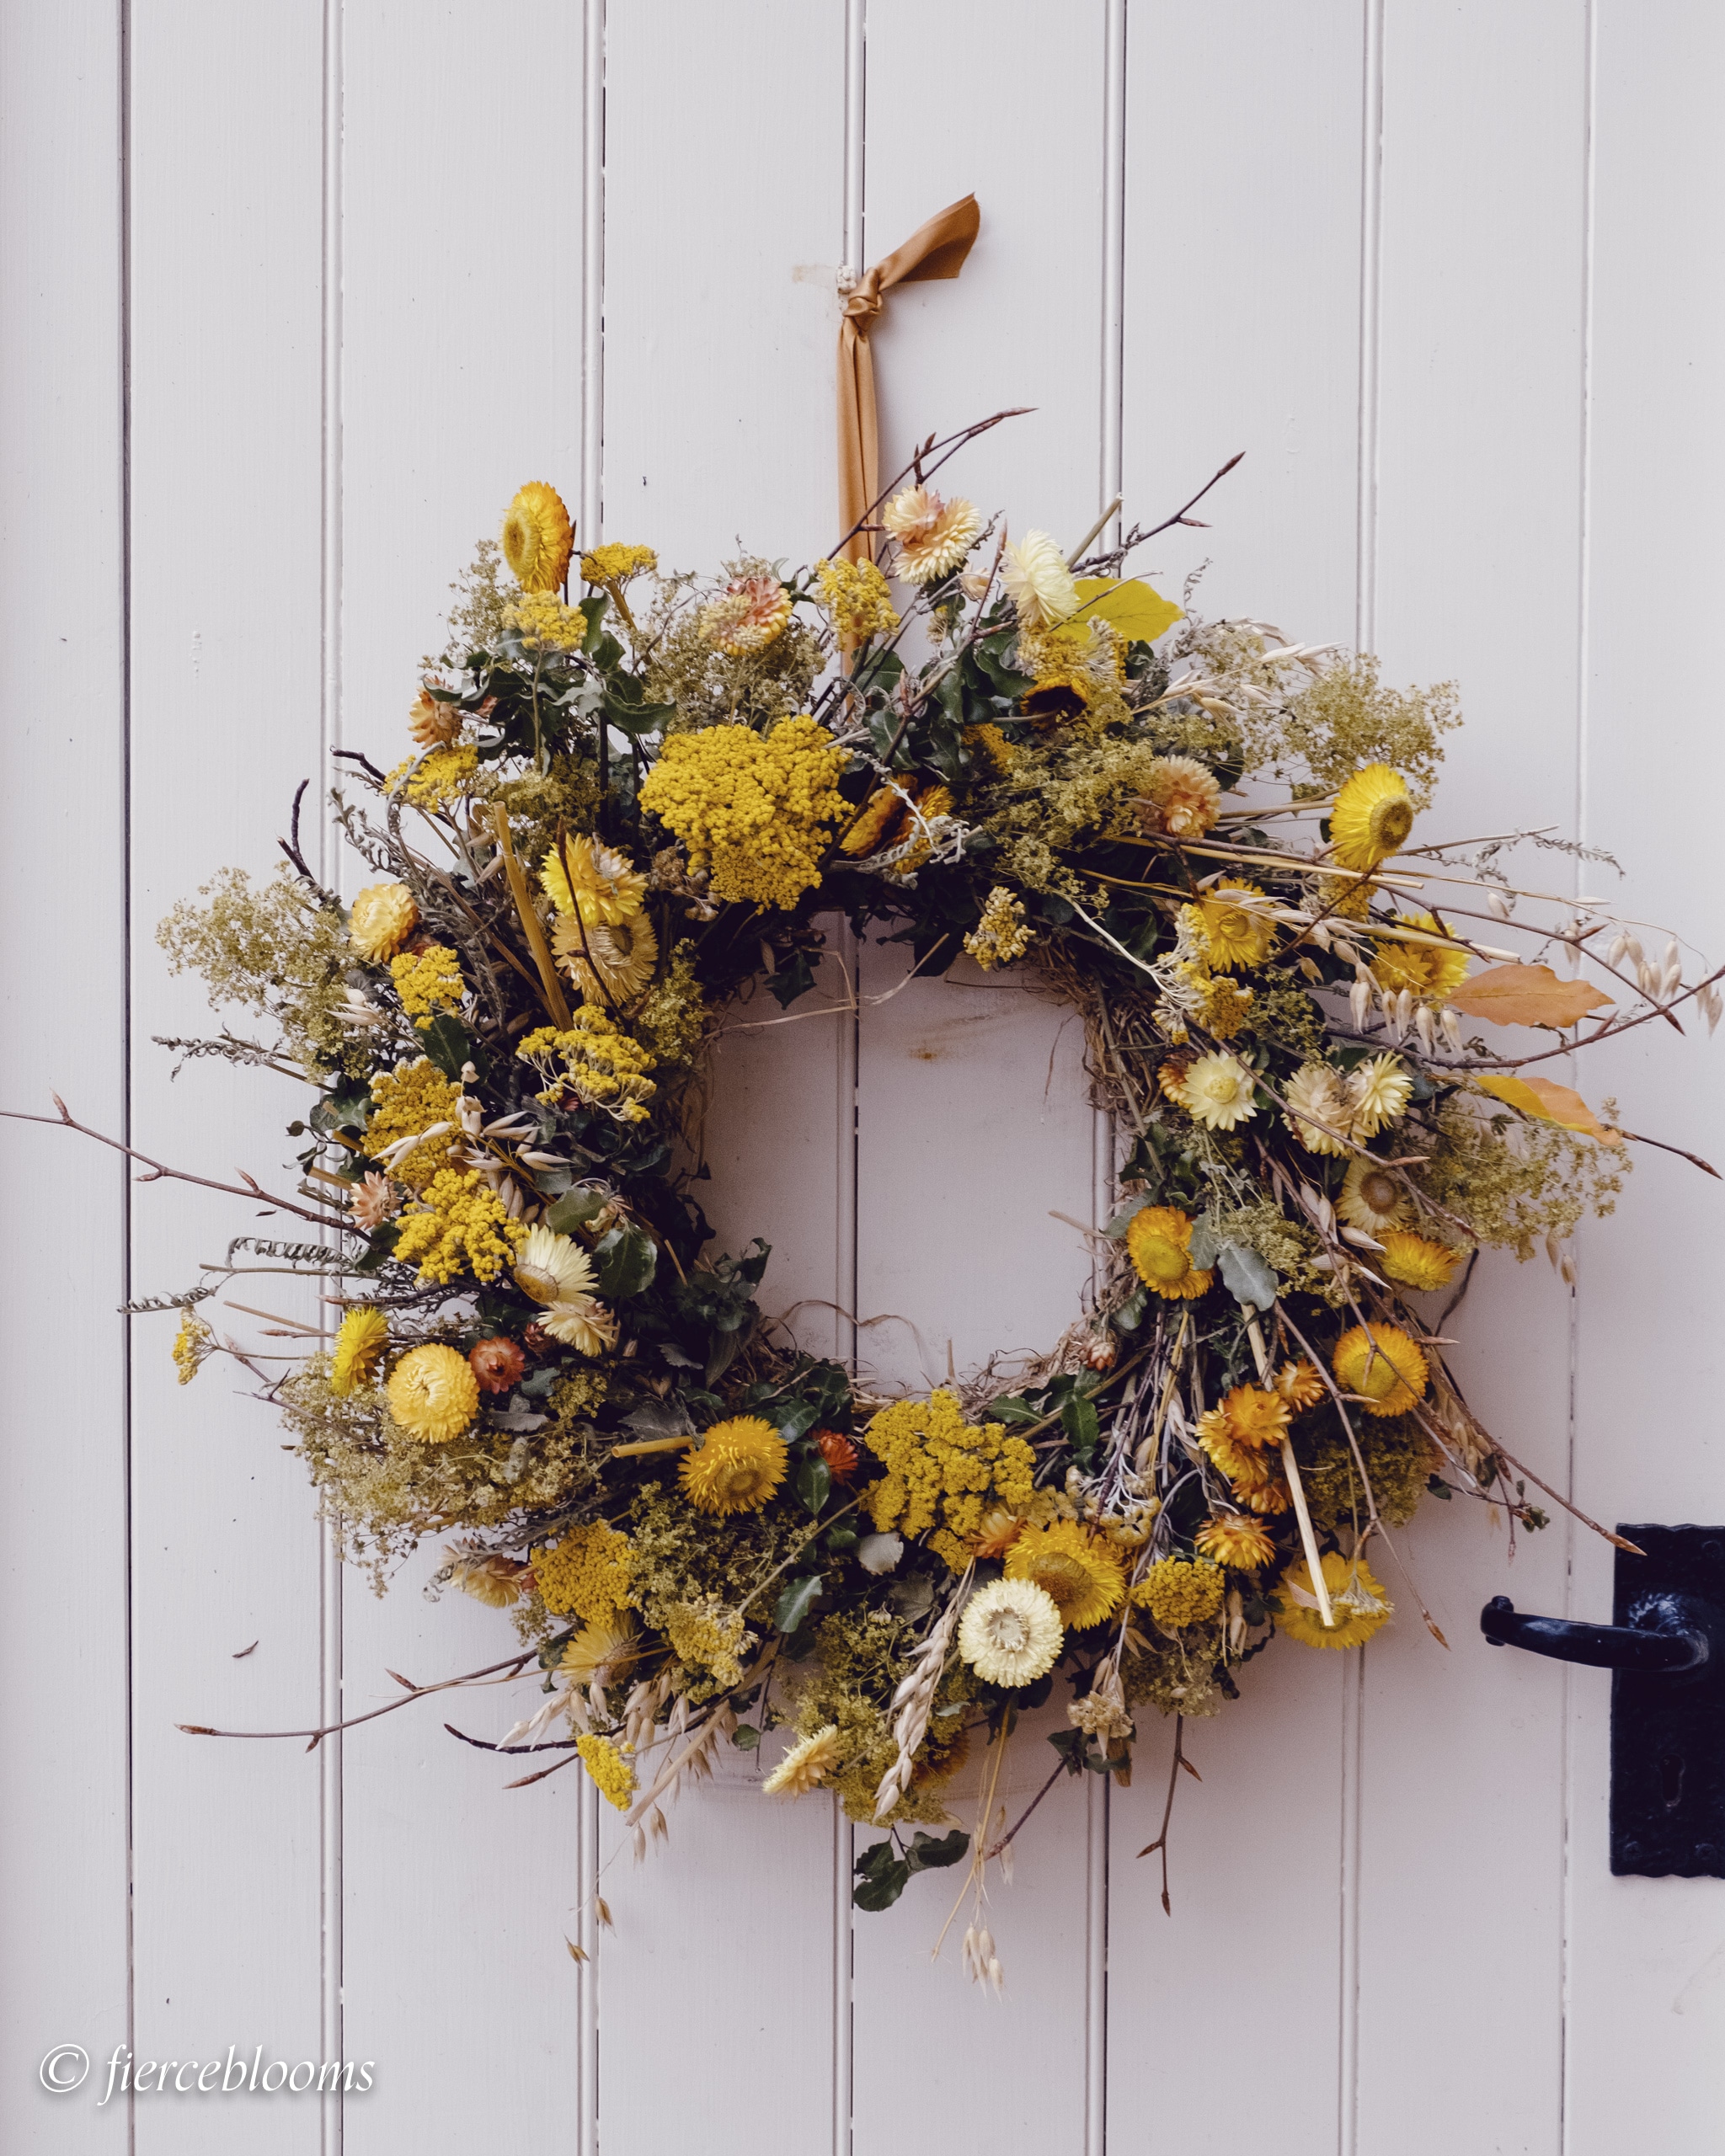 Featured image for “Everlasting Wild Garden Style Dried Flower Wreath - Melyn Tragwyddol”